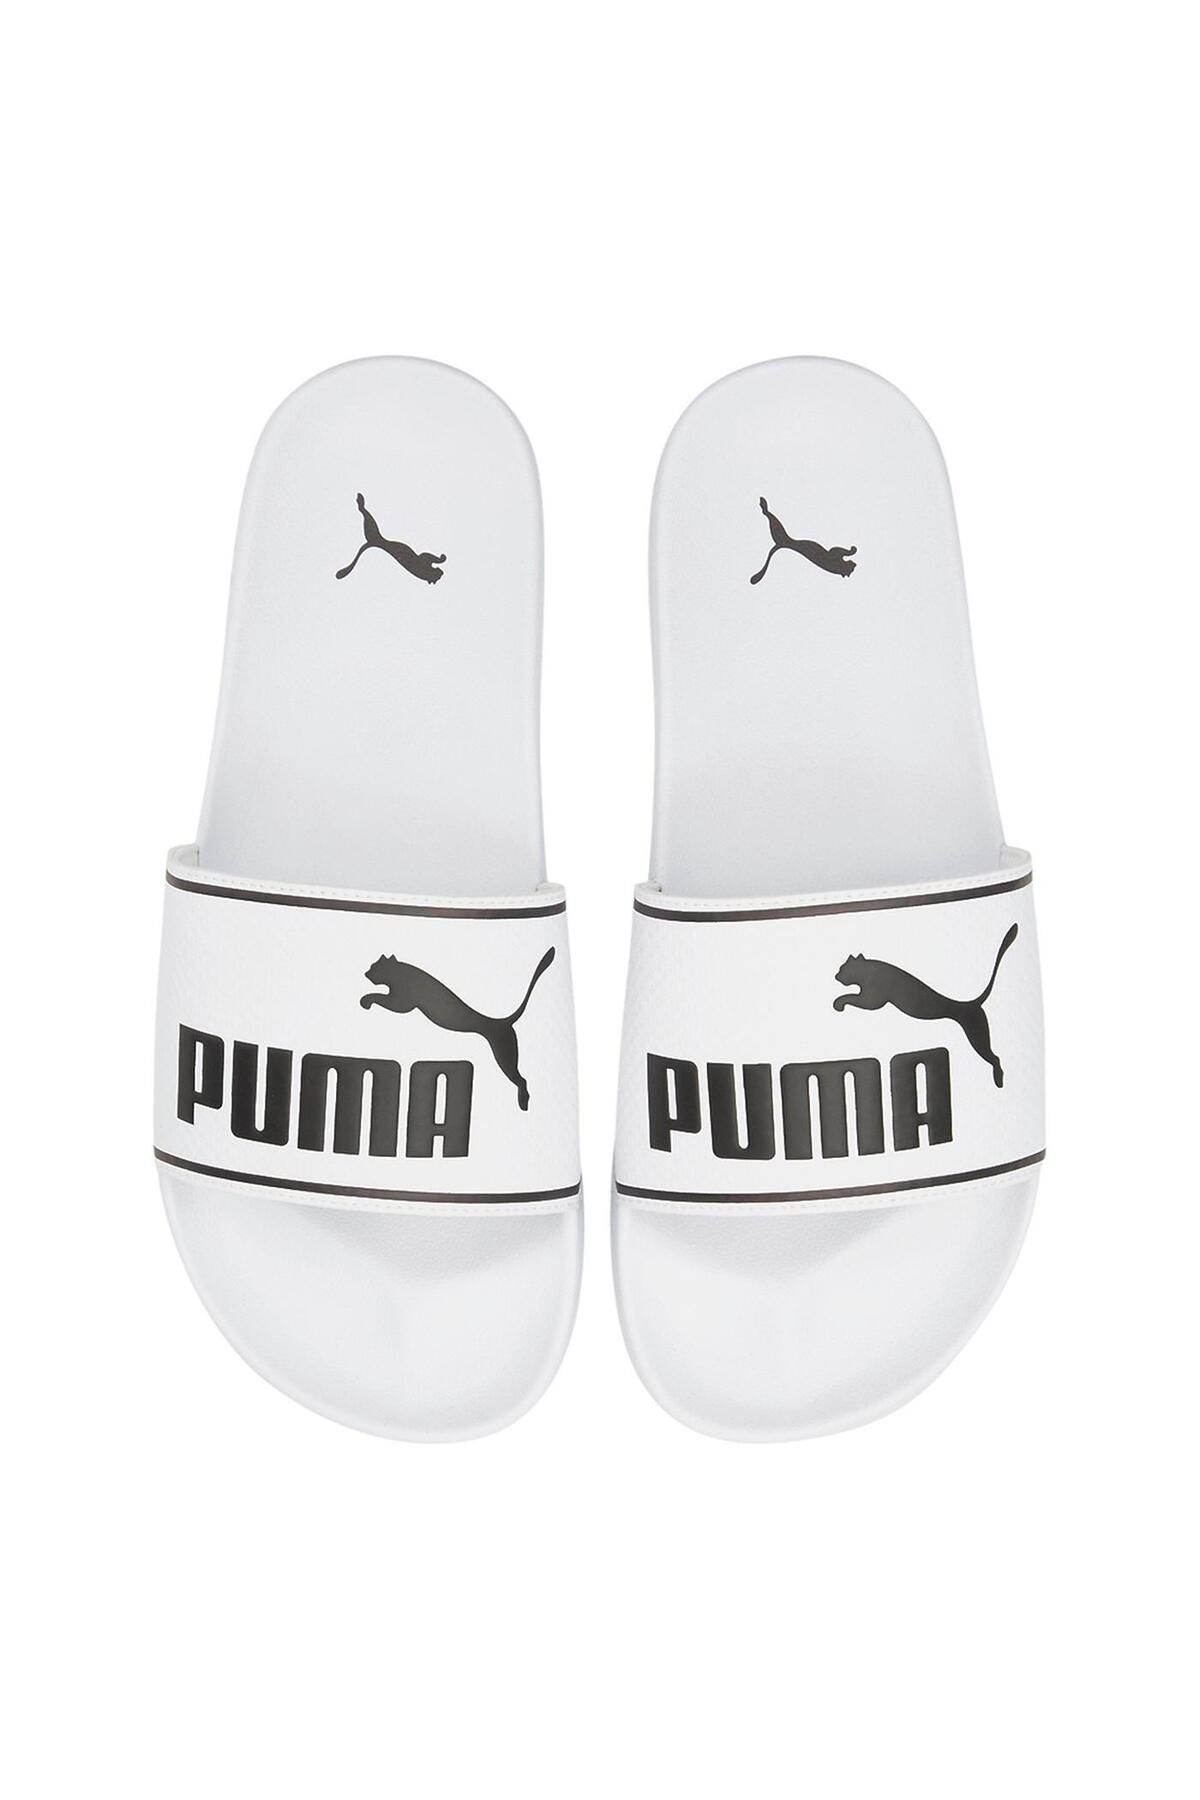 Puma Leadcat 2.0 Unisex White Slippers 384139-02